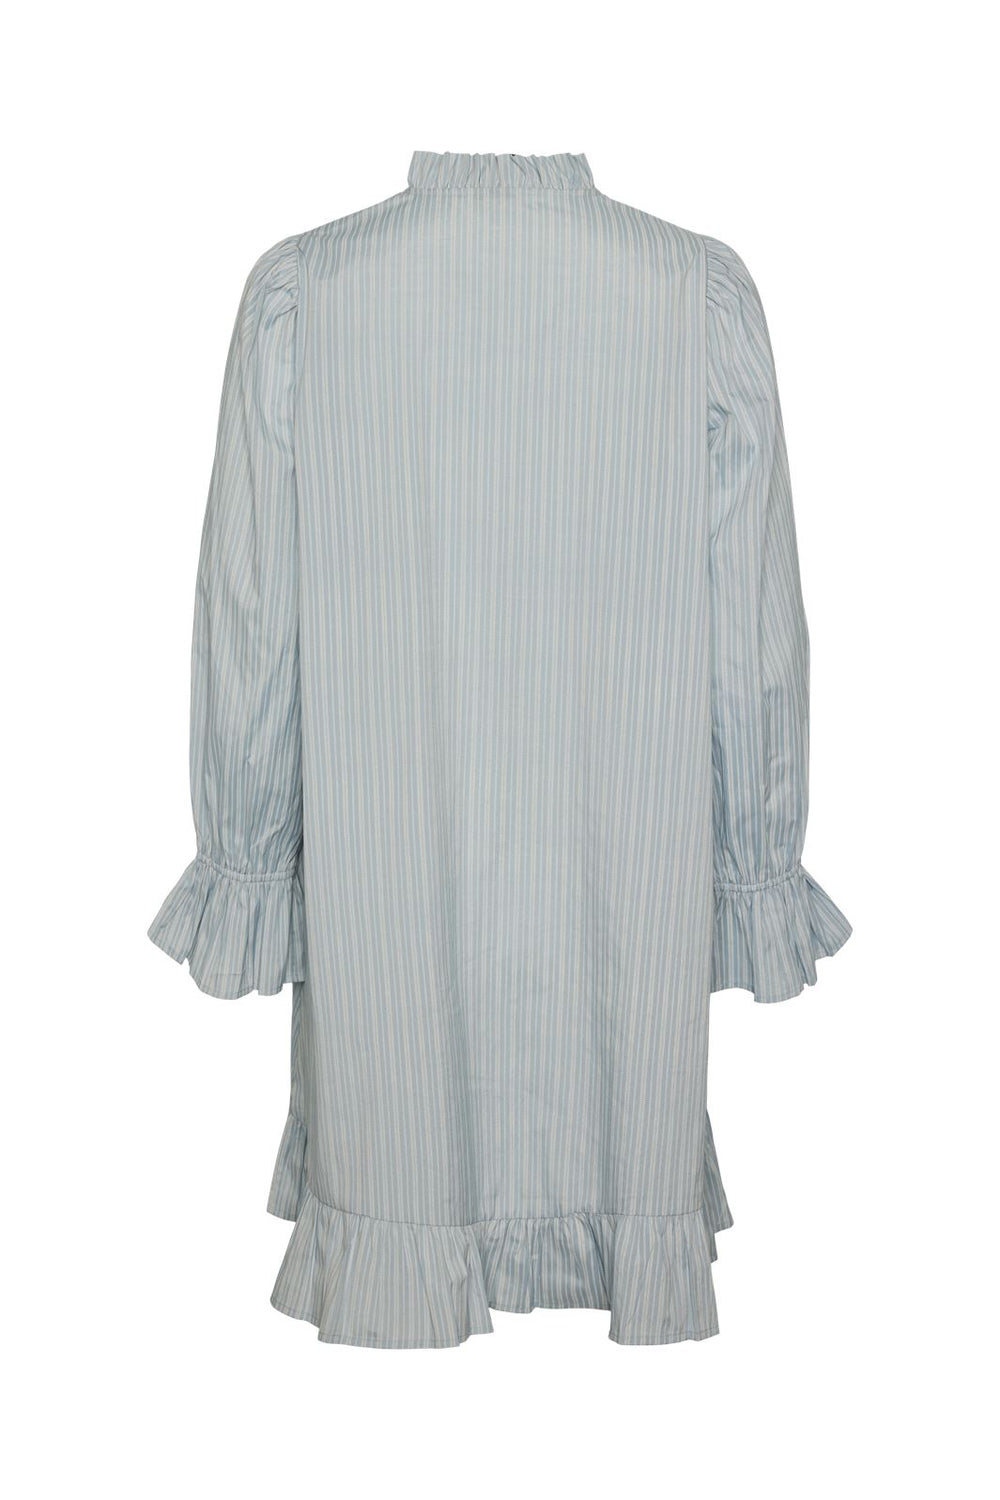 Pieces - Pcassra Ls Short Dress - 4598988 Blue Bell Bright White